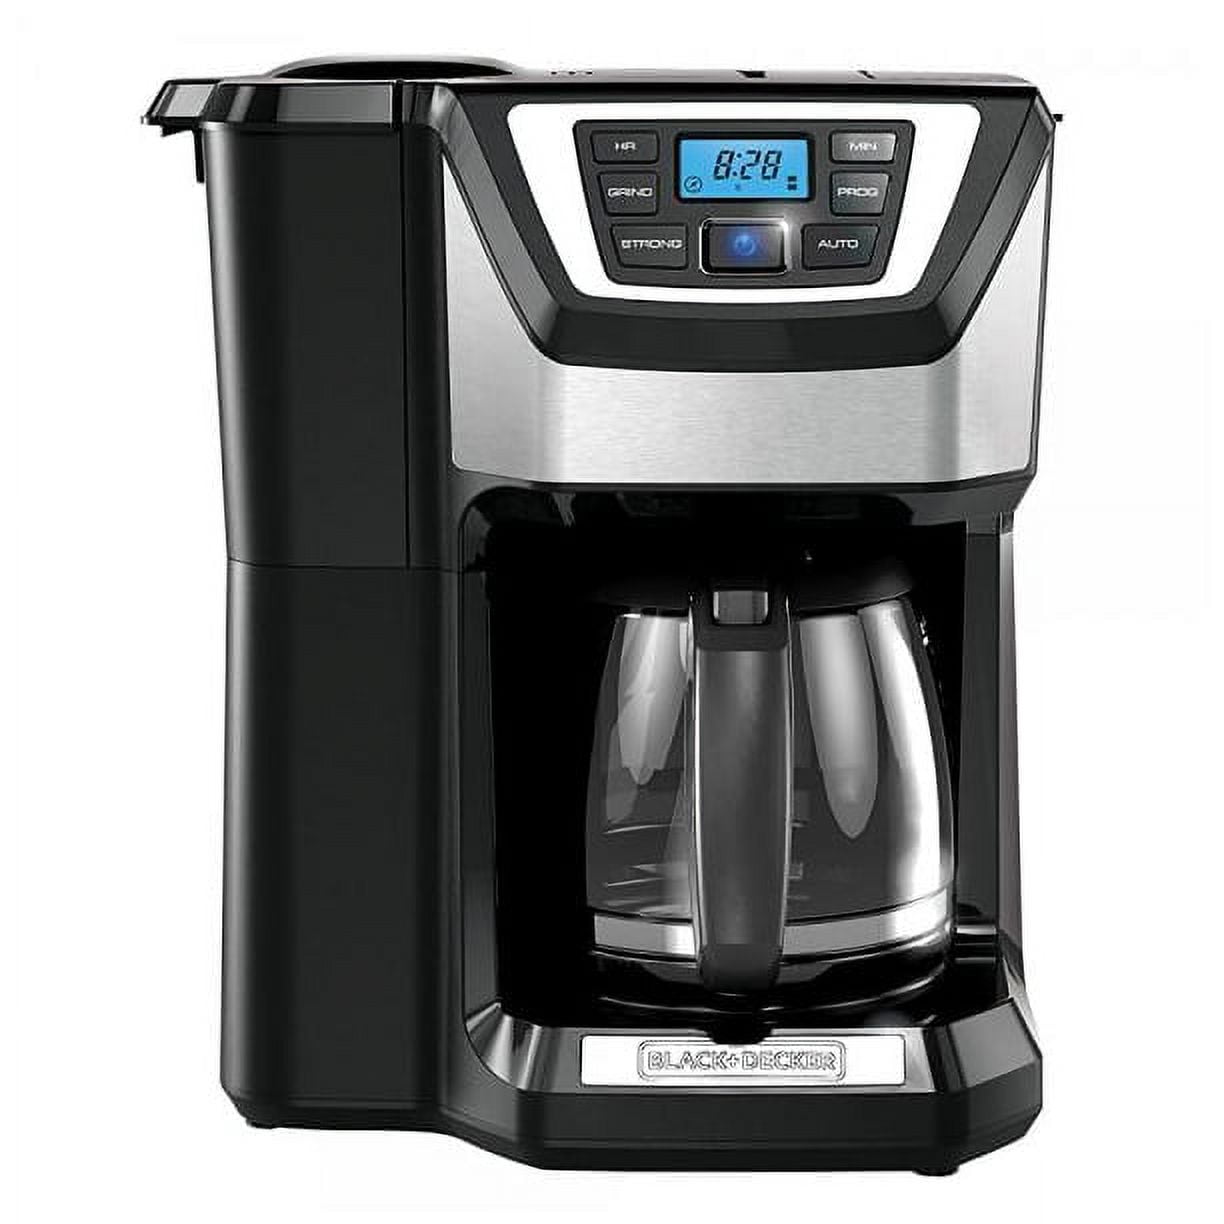 Ninja Replacement Main Unit CFP201 DualBrew Coffee Maker K